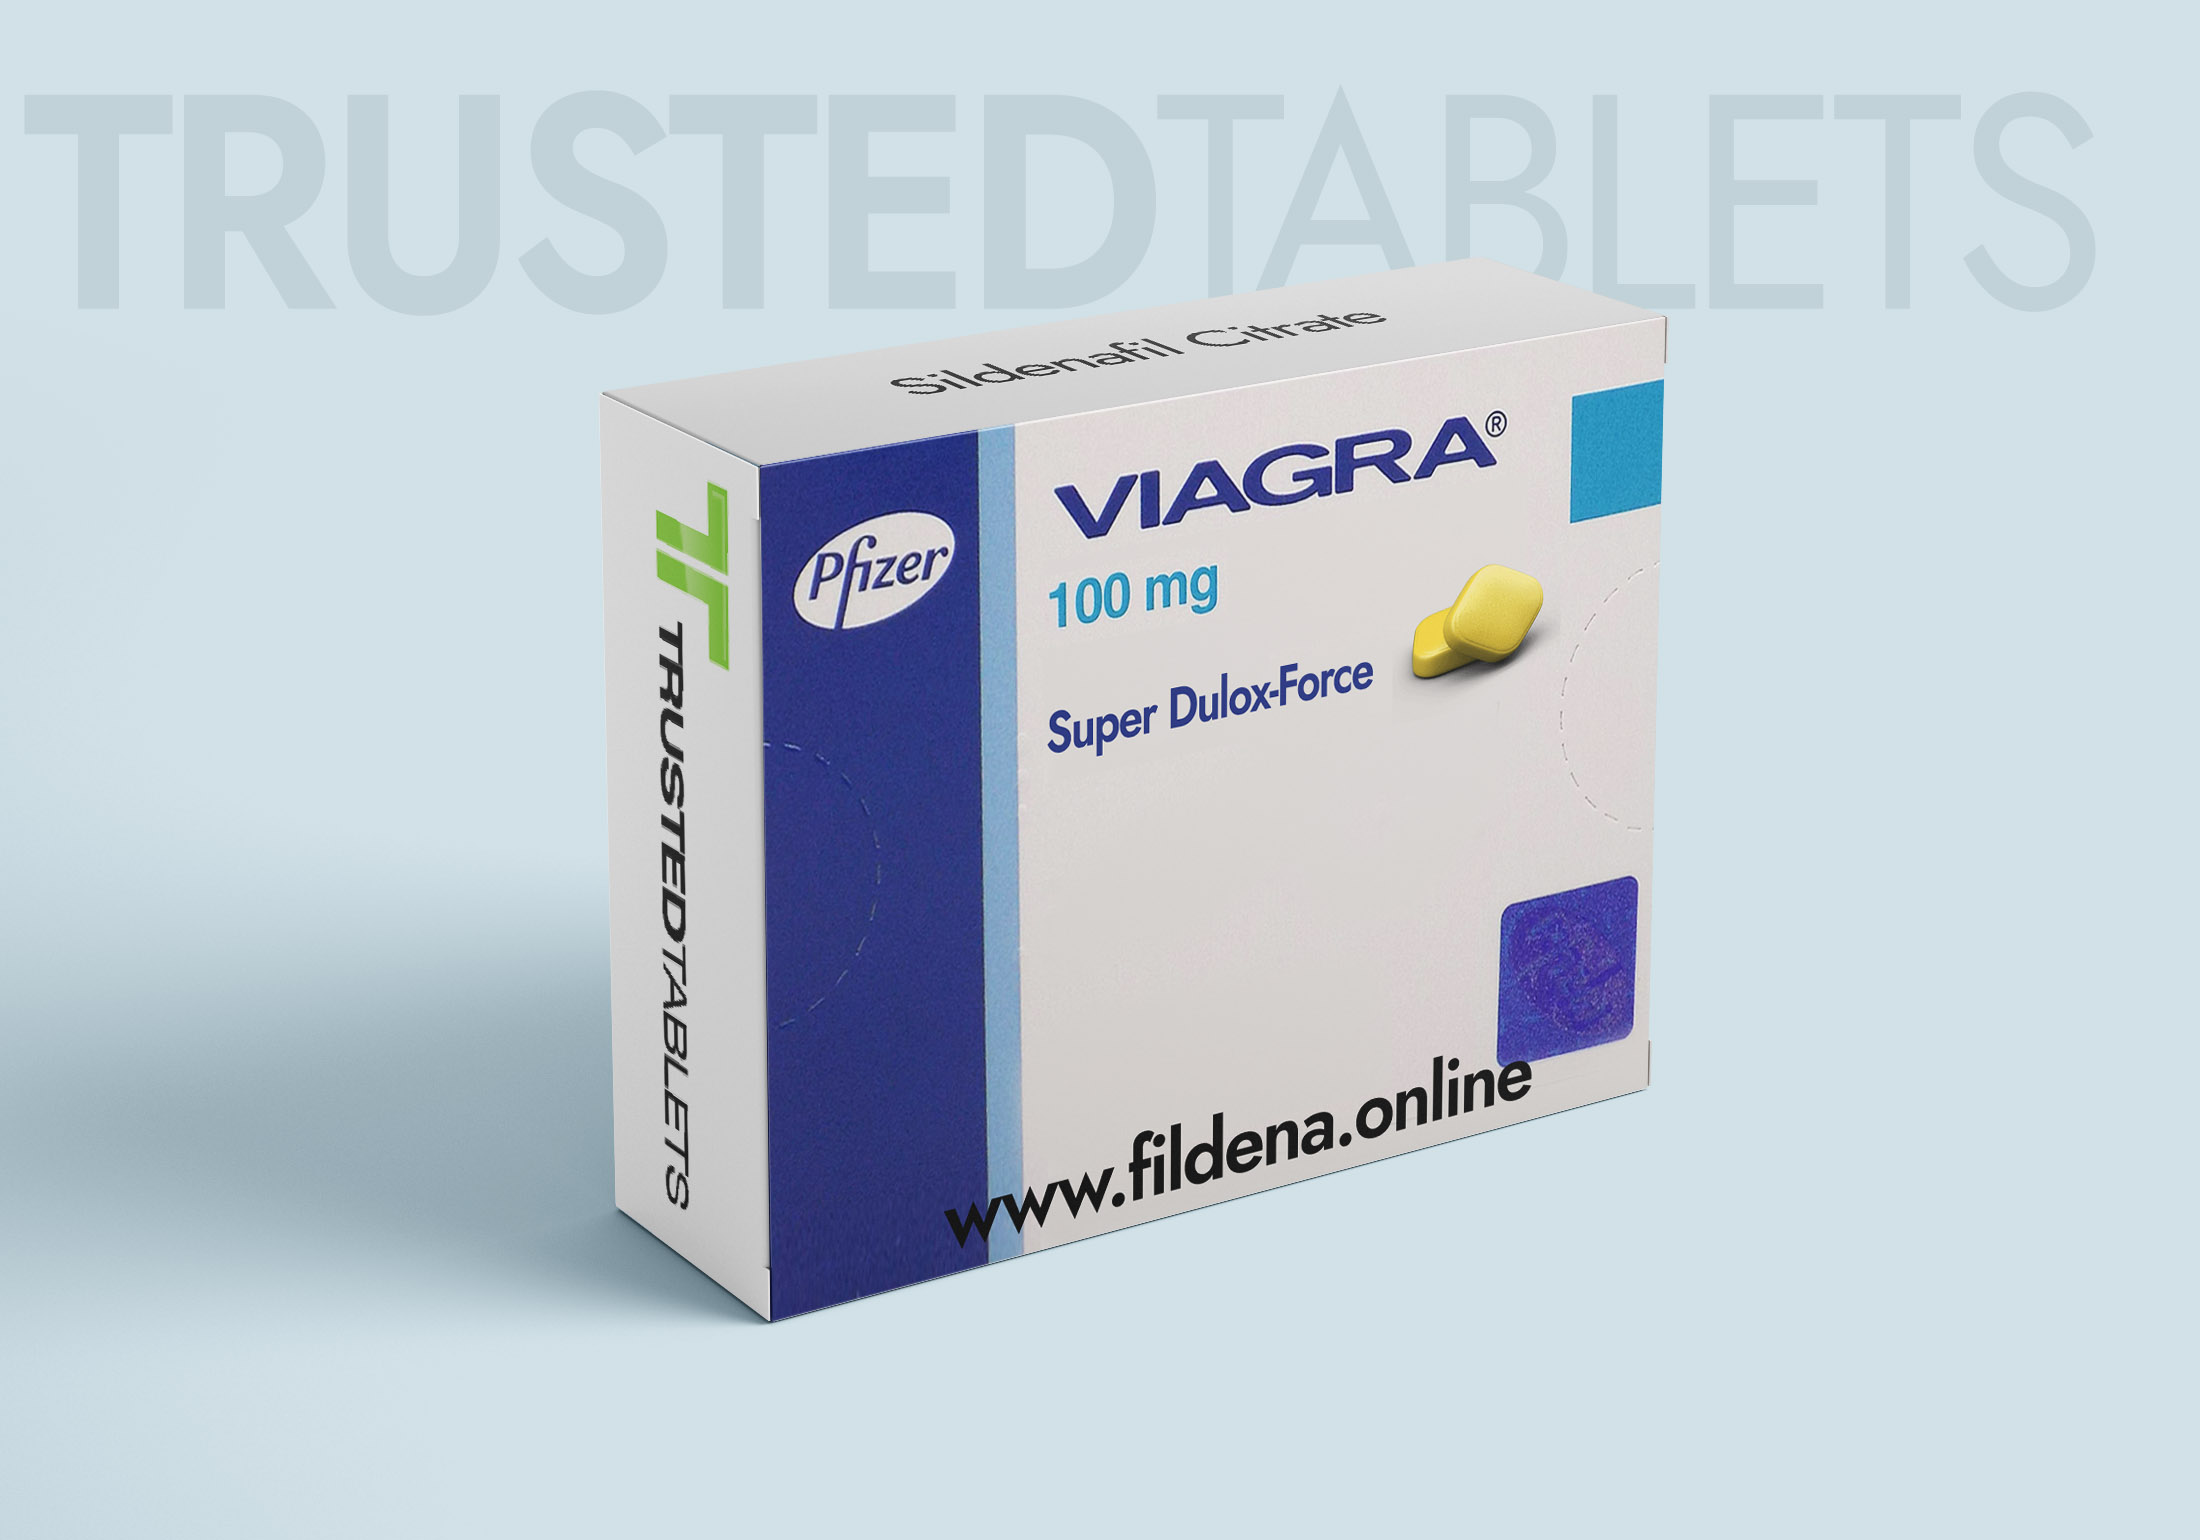 Viagra Super Dulox-Force